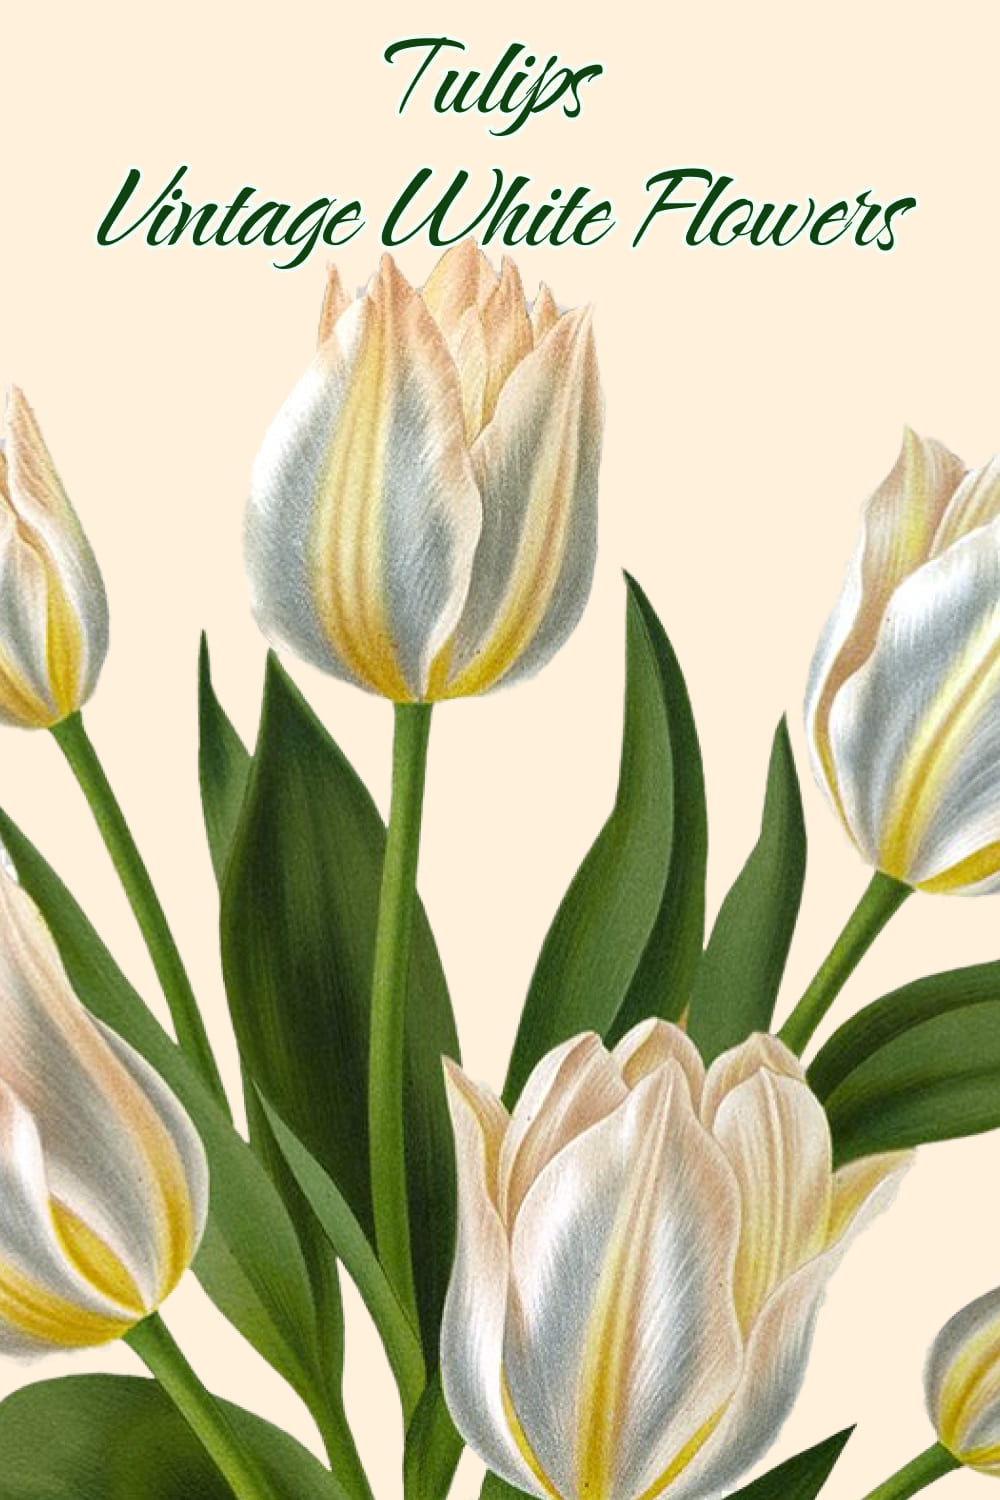 tulips vintage white flowers 04